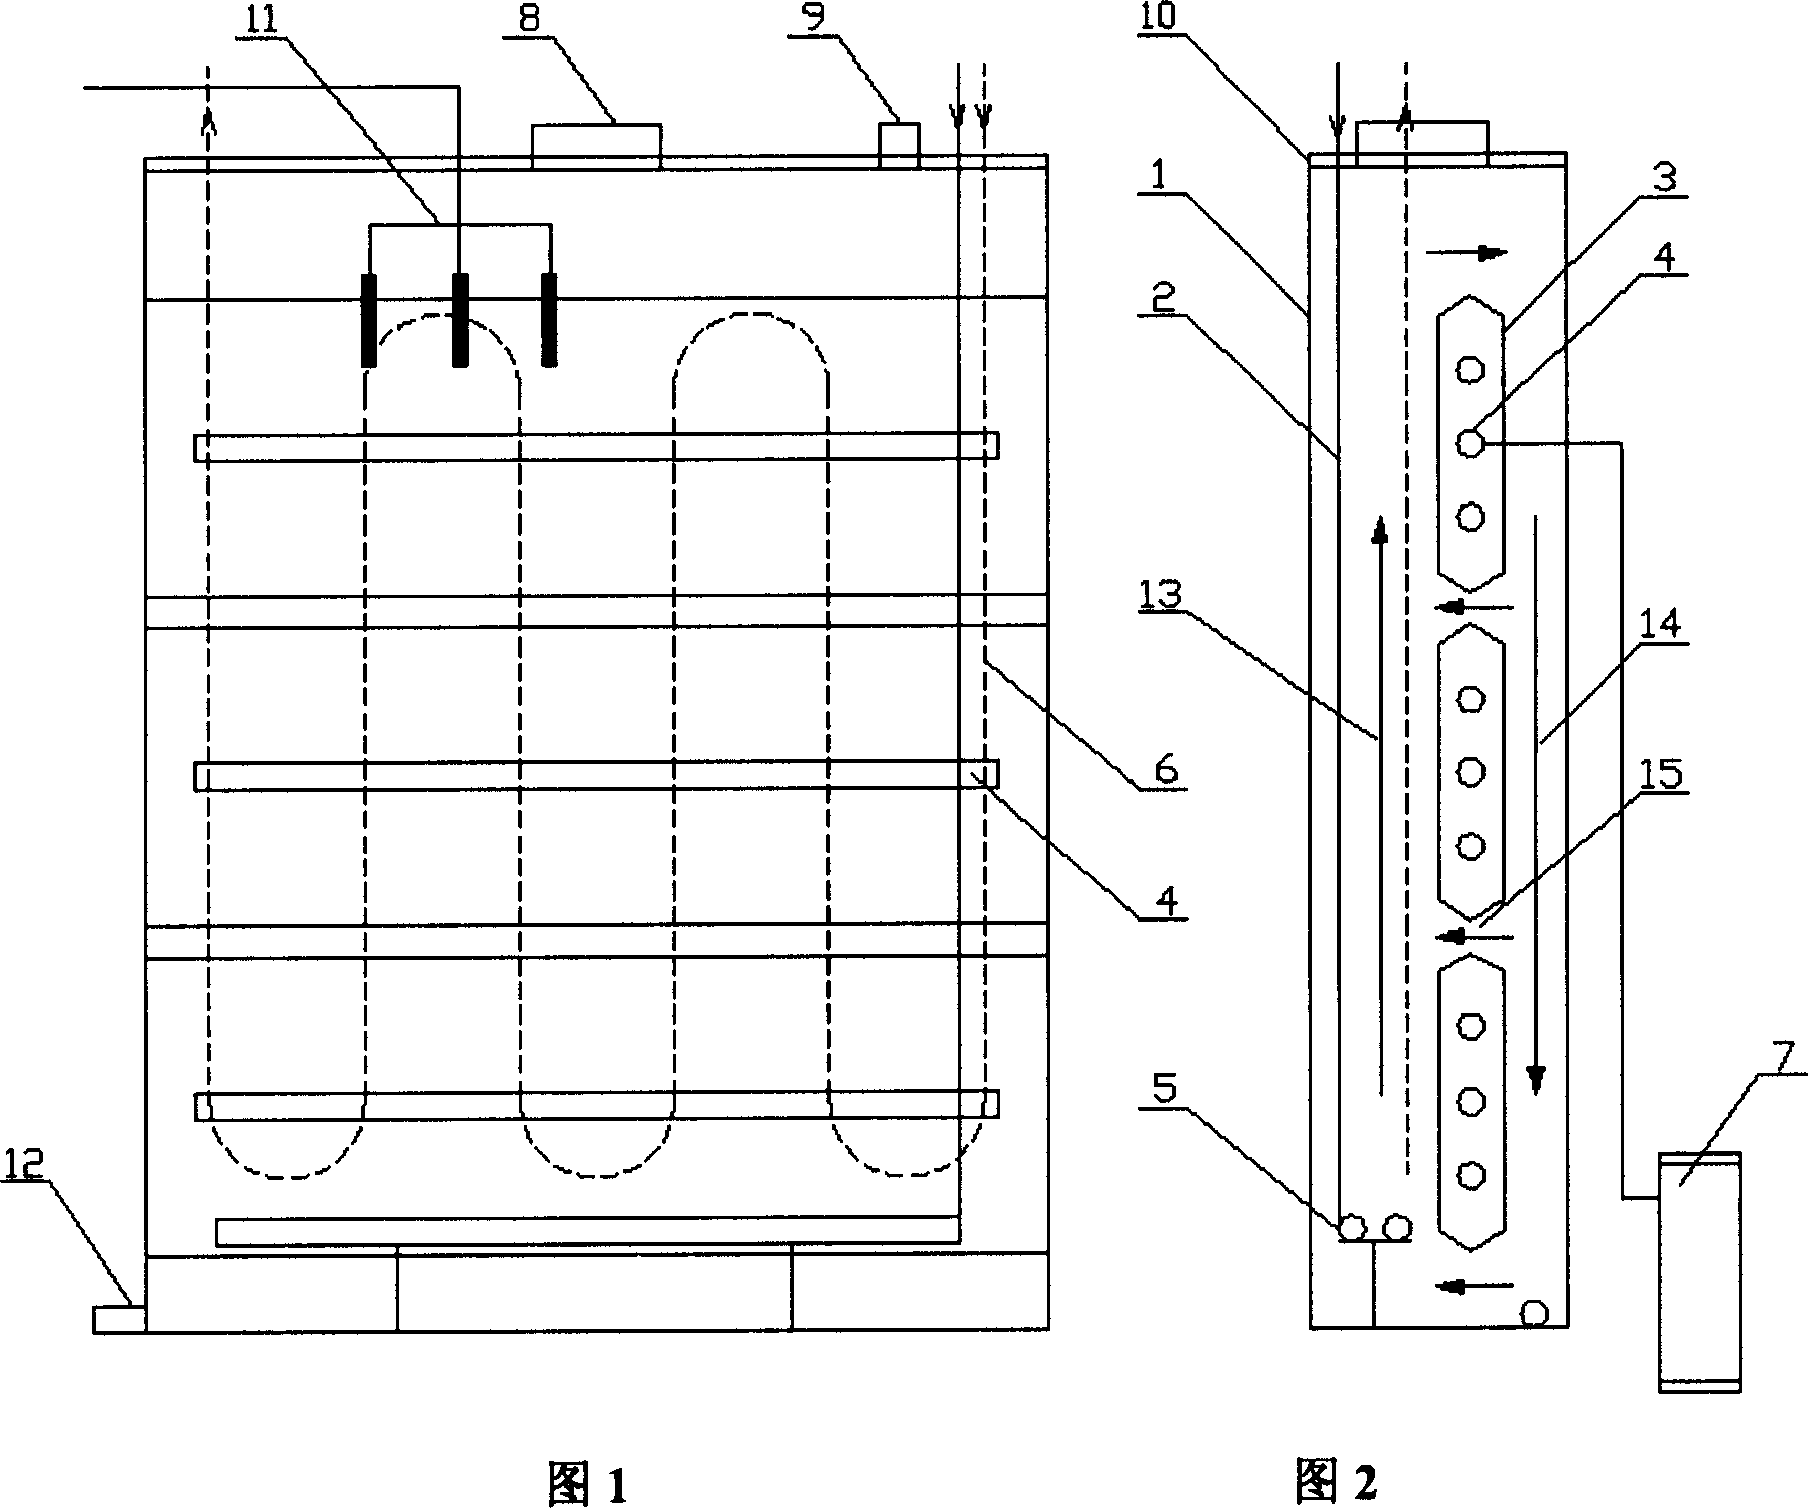 Multi-section flat type photo-bioreactor